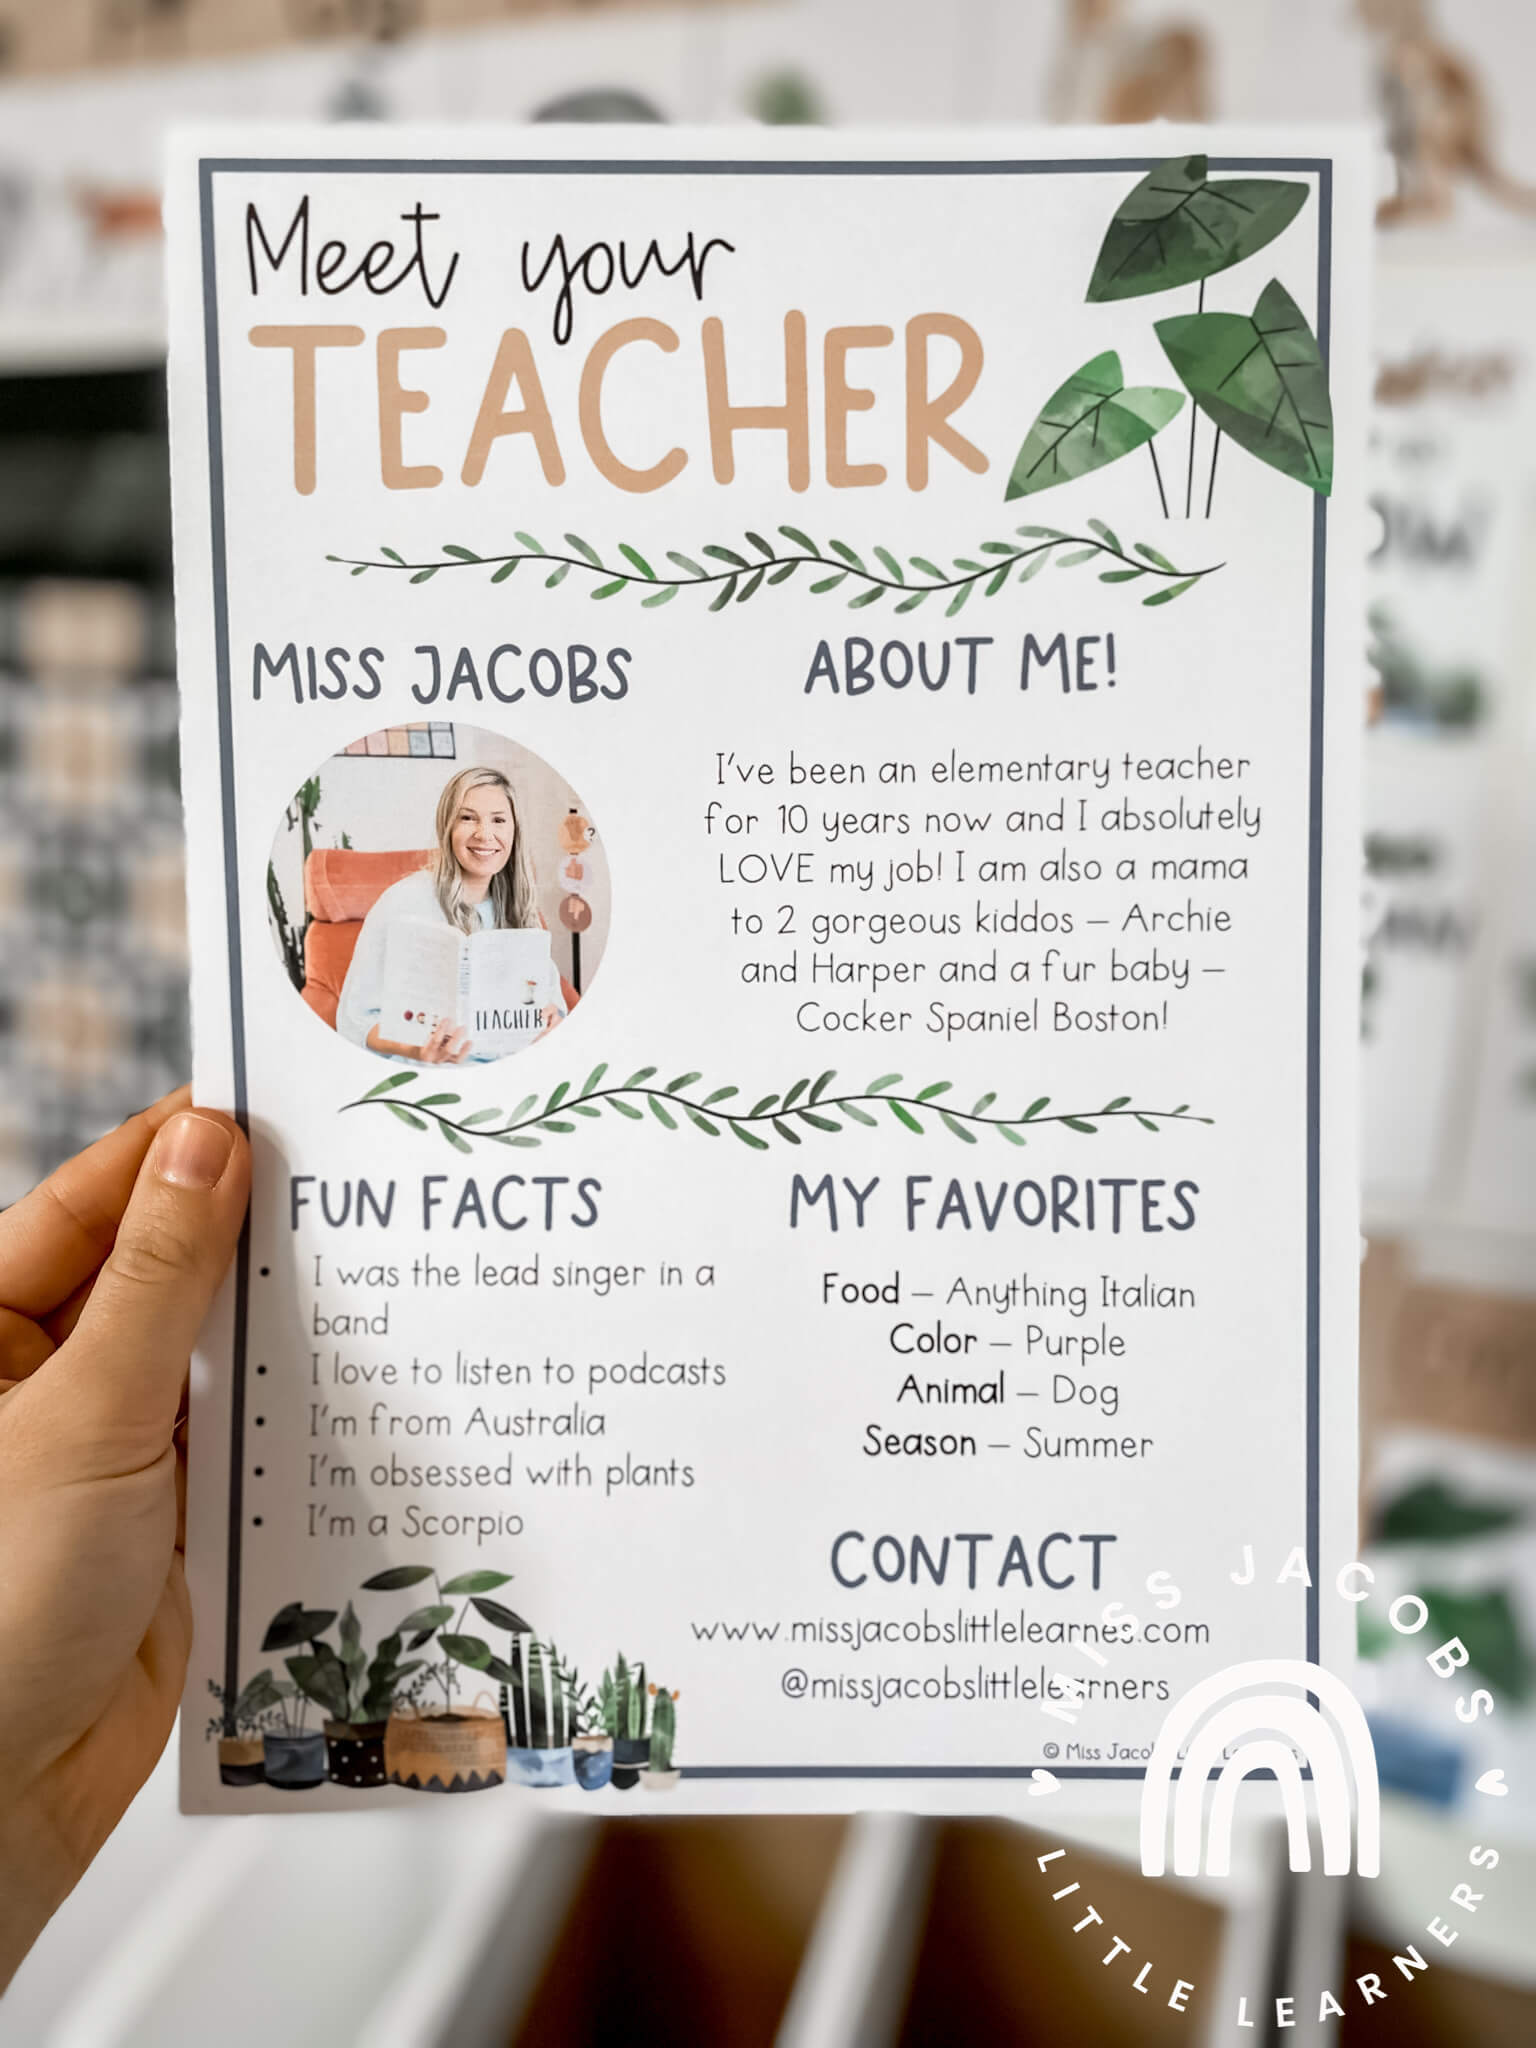 meet-the-teacher-templates-editable-modern-boho-plants-decor-miss